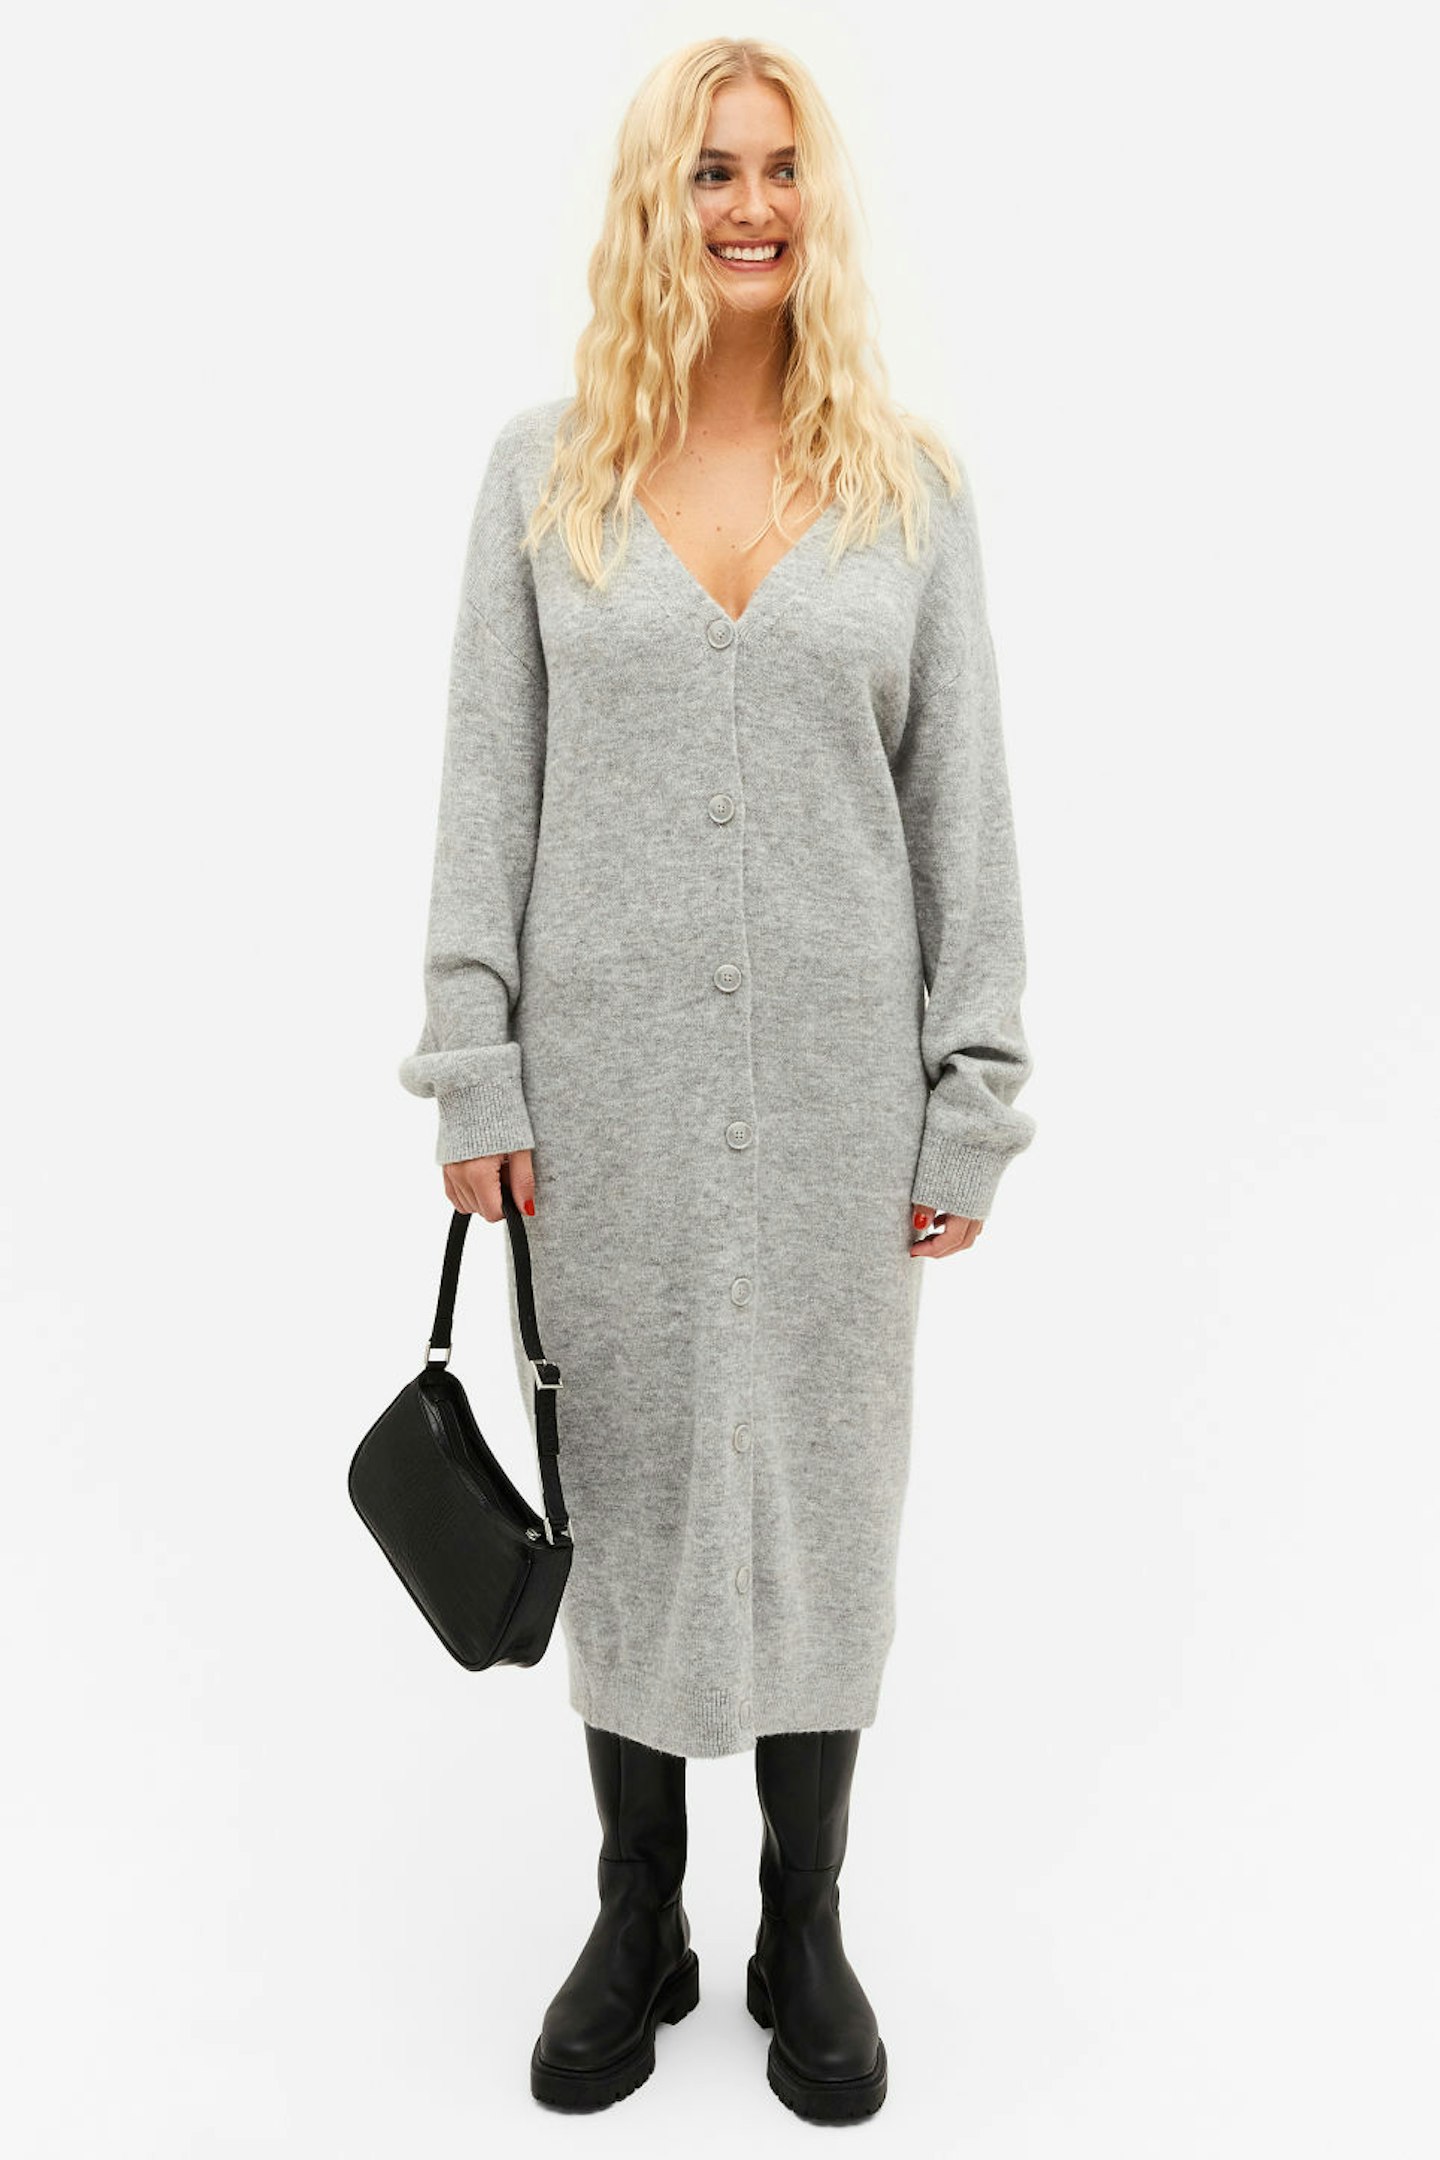 Monki, Grey Long Knitted Cardigan Dress